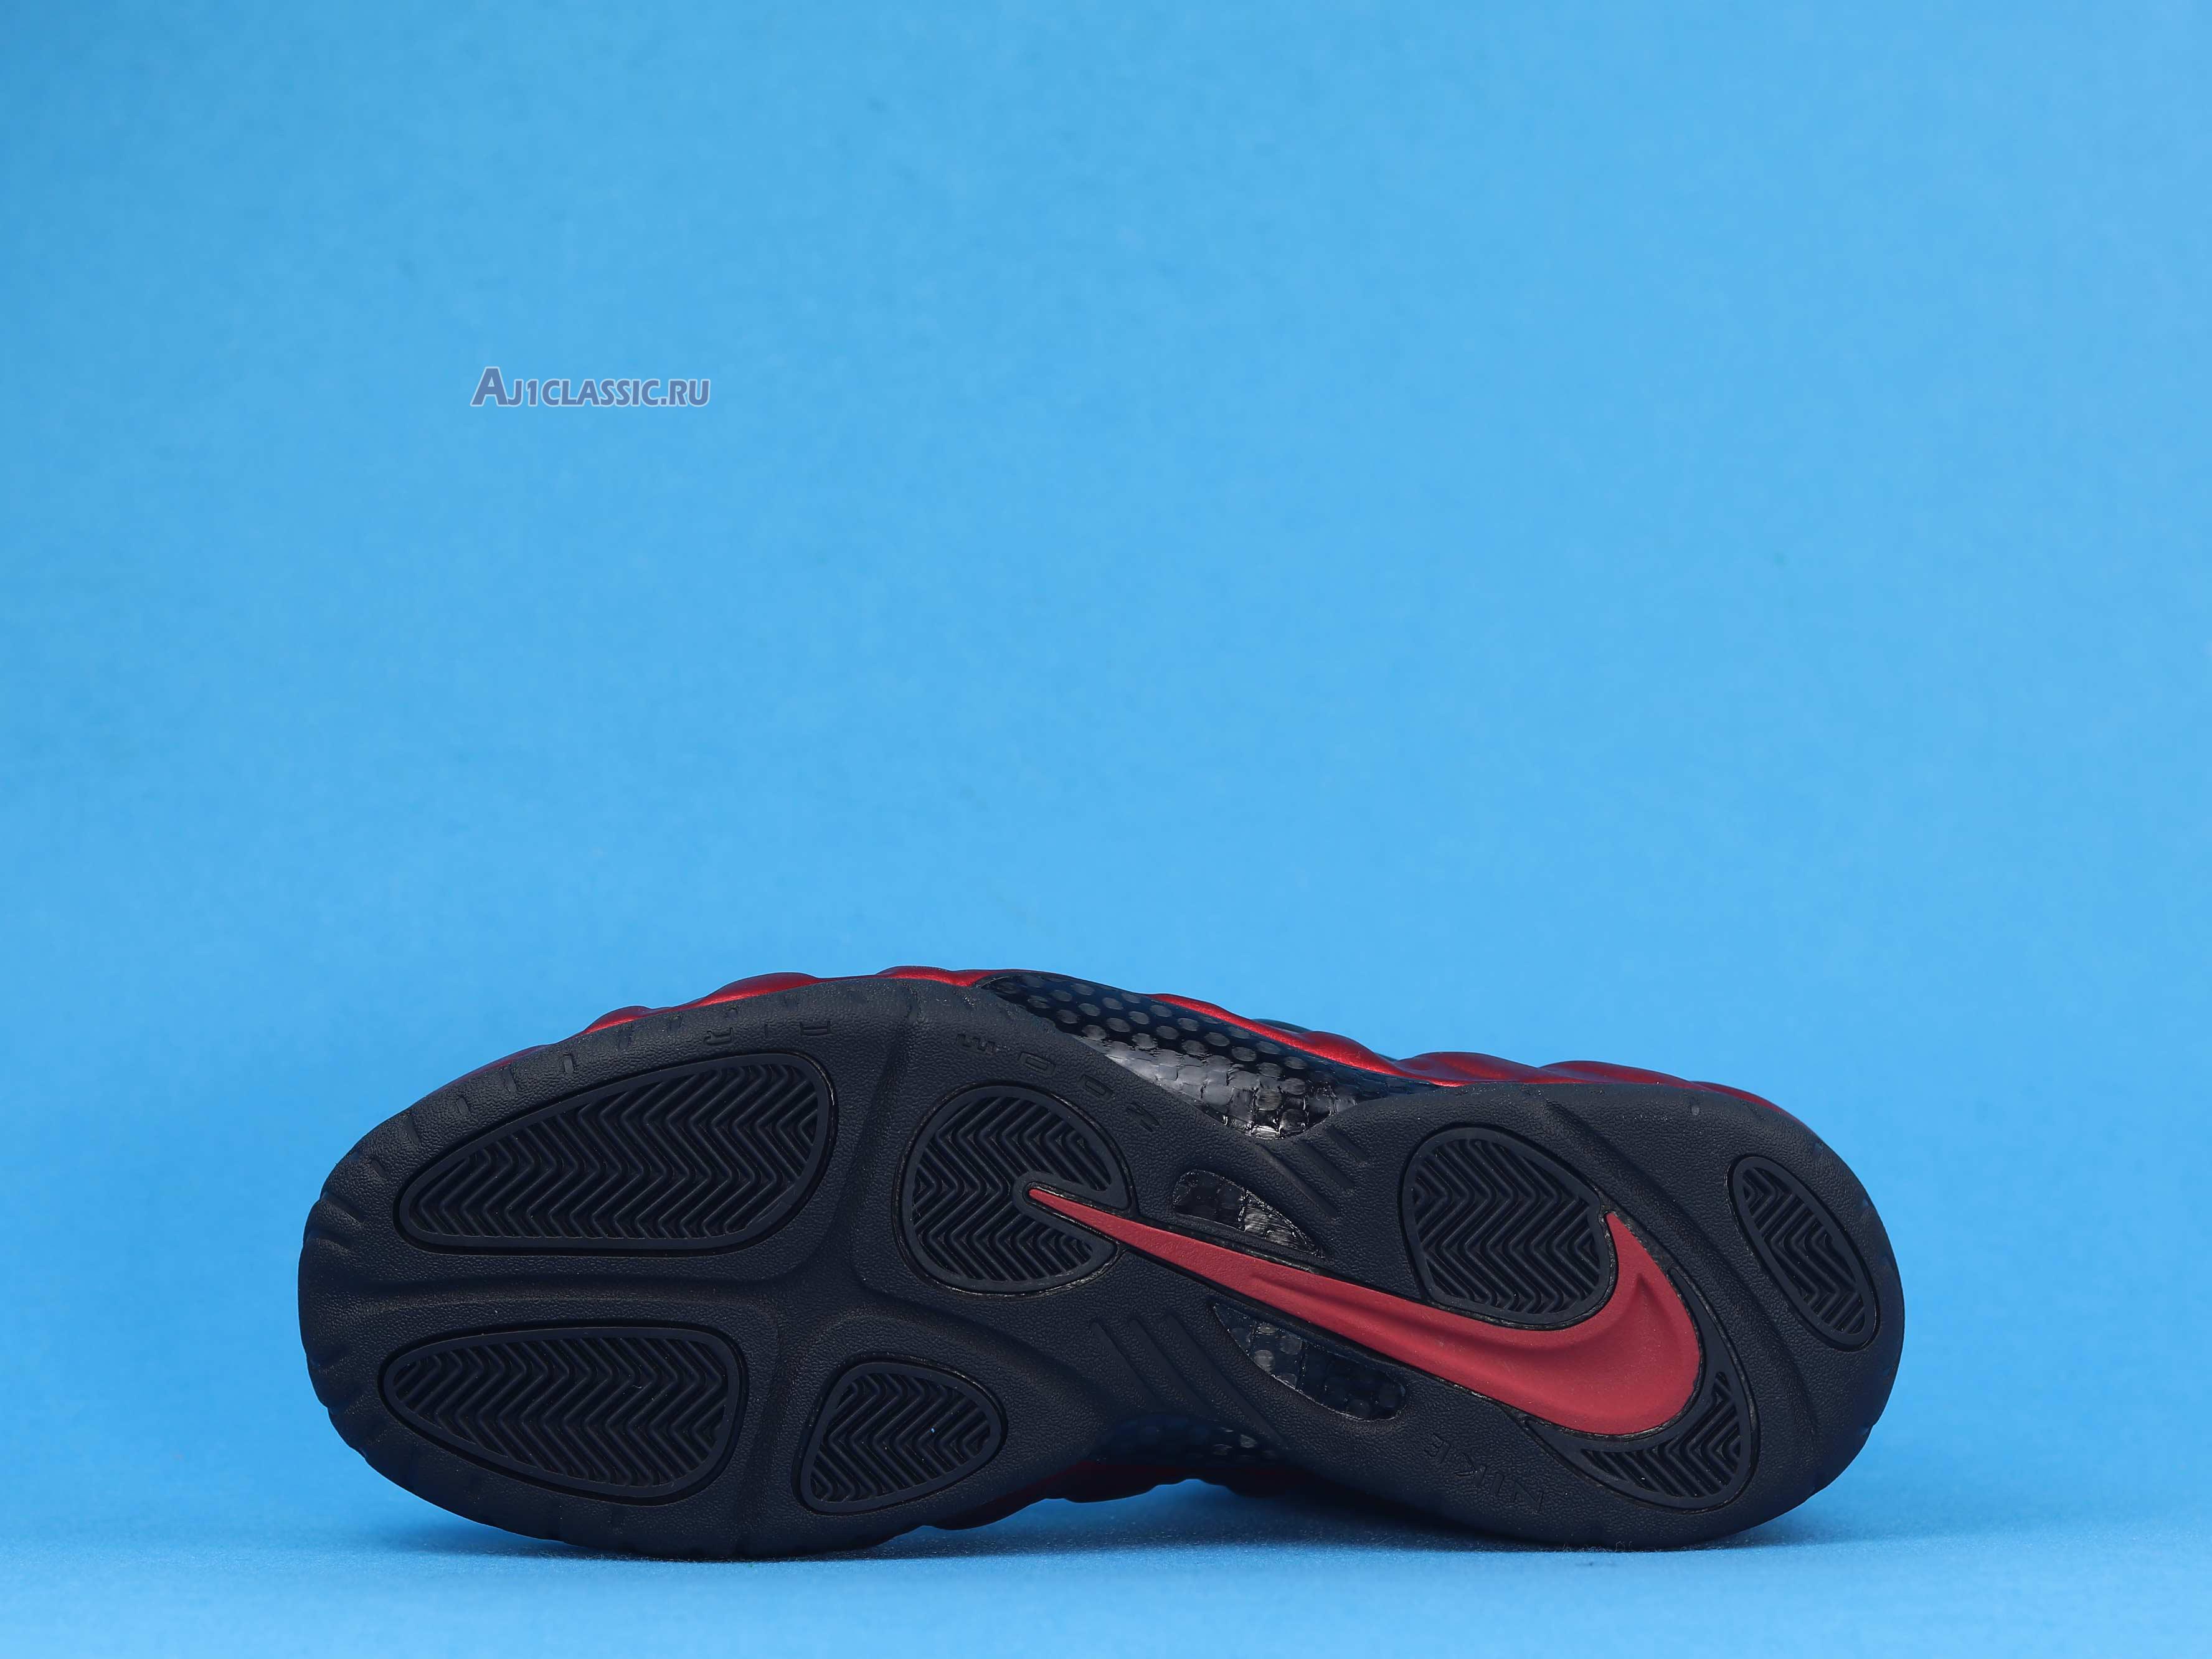 Nike Air Foamposite Pro "University Red" 624041-604